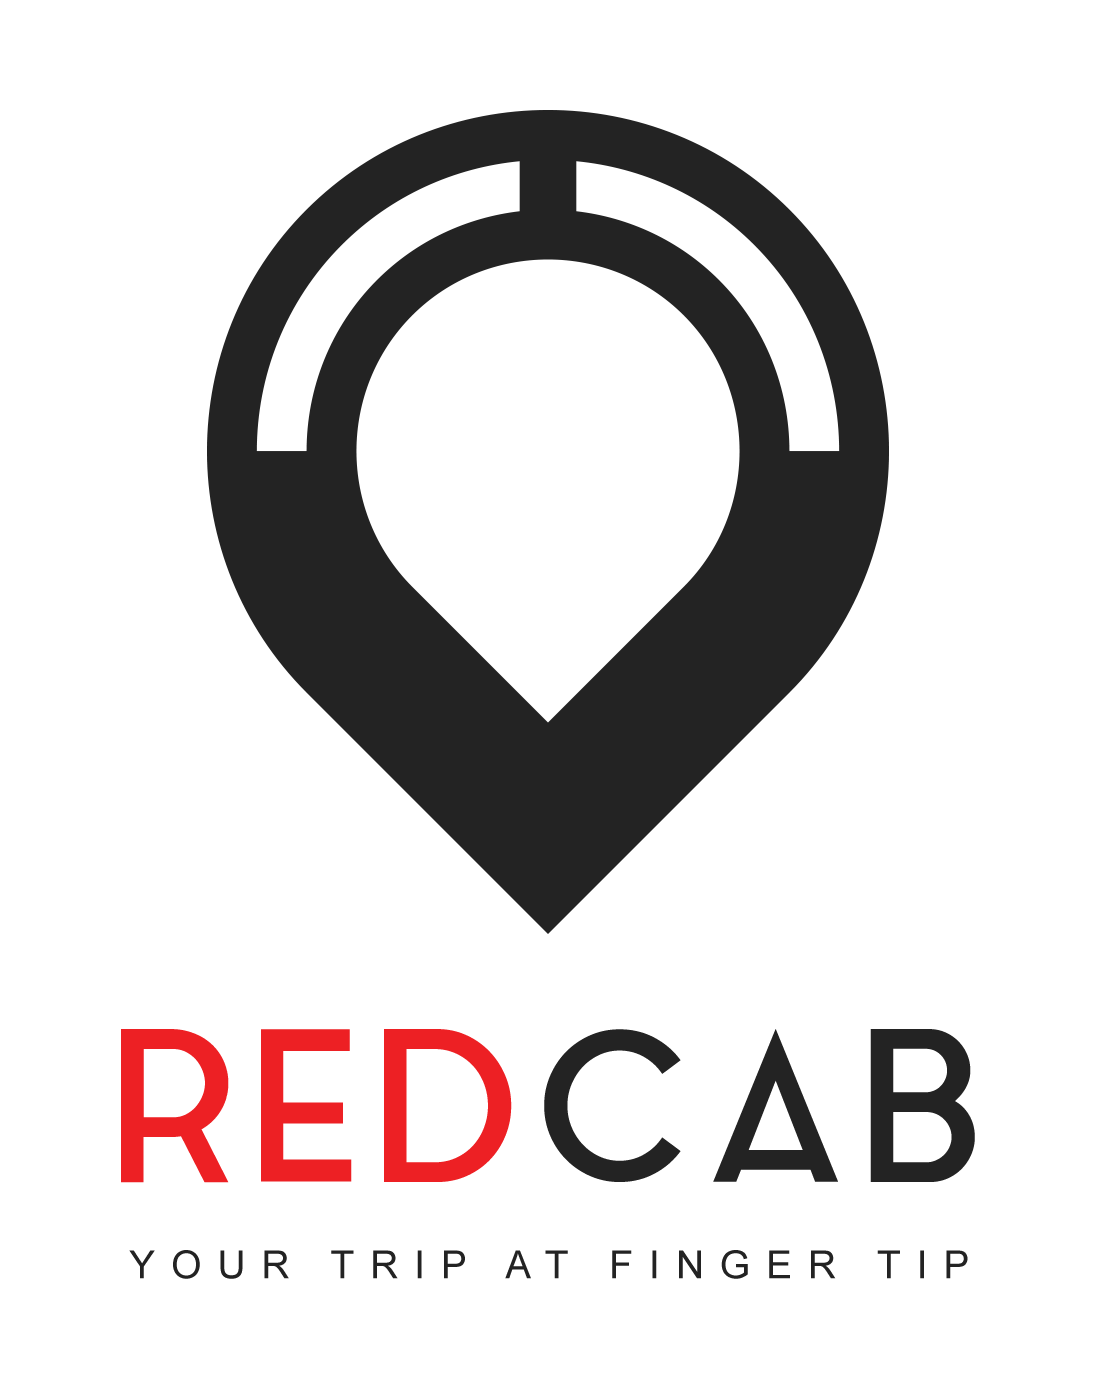 RedCab